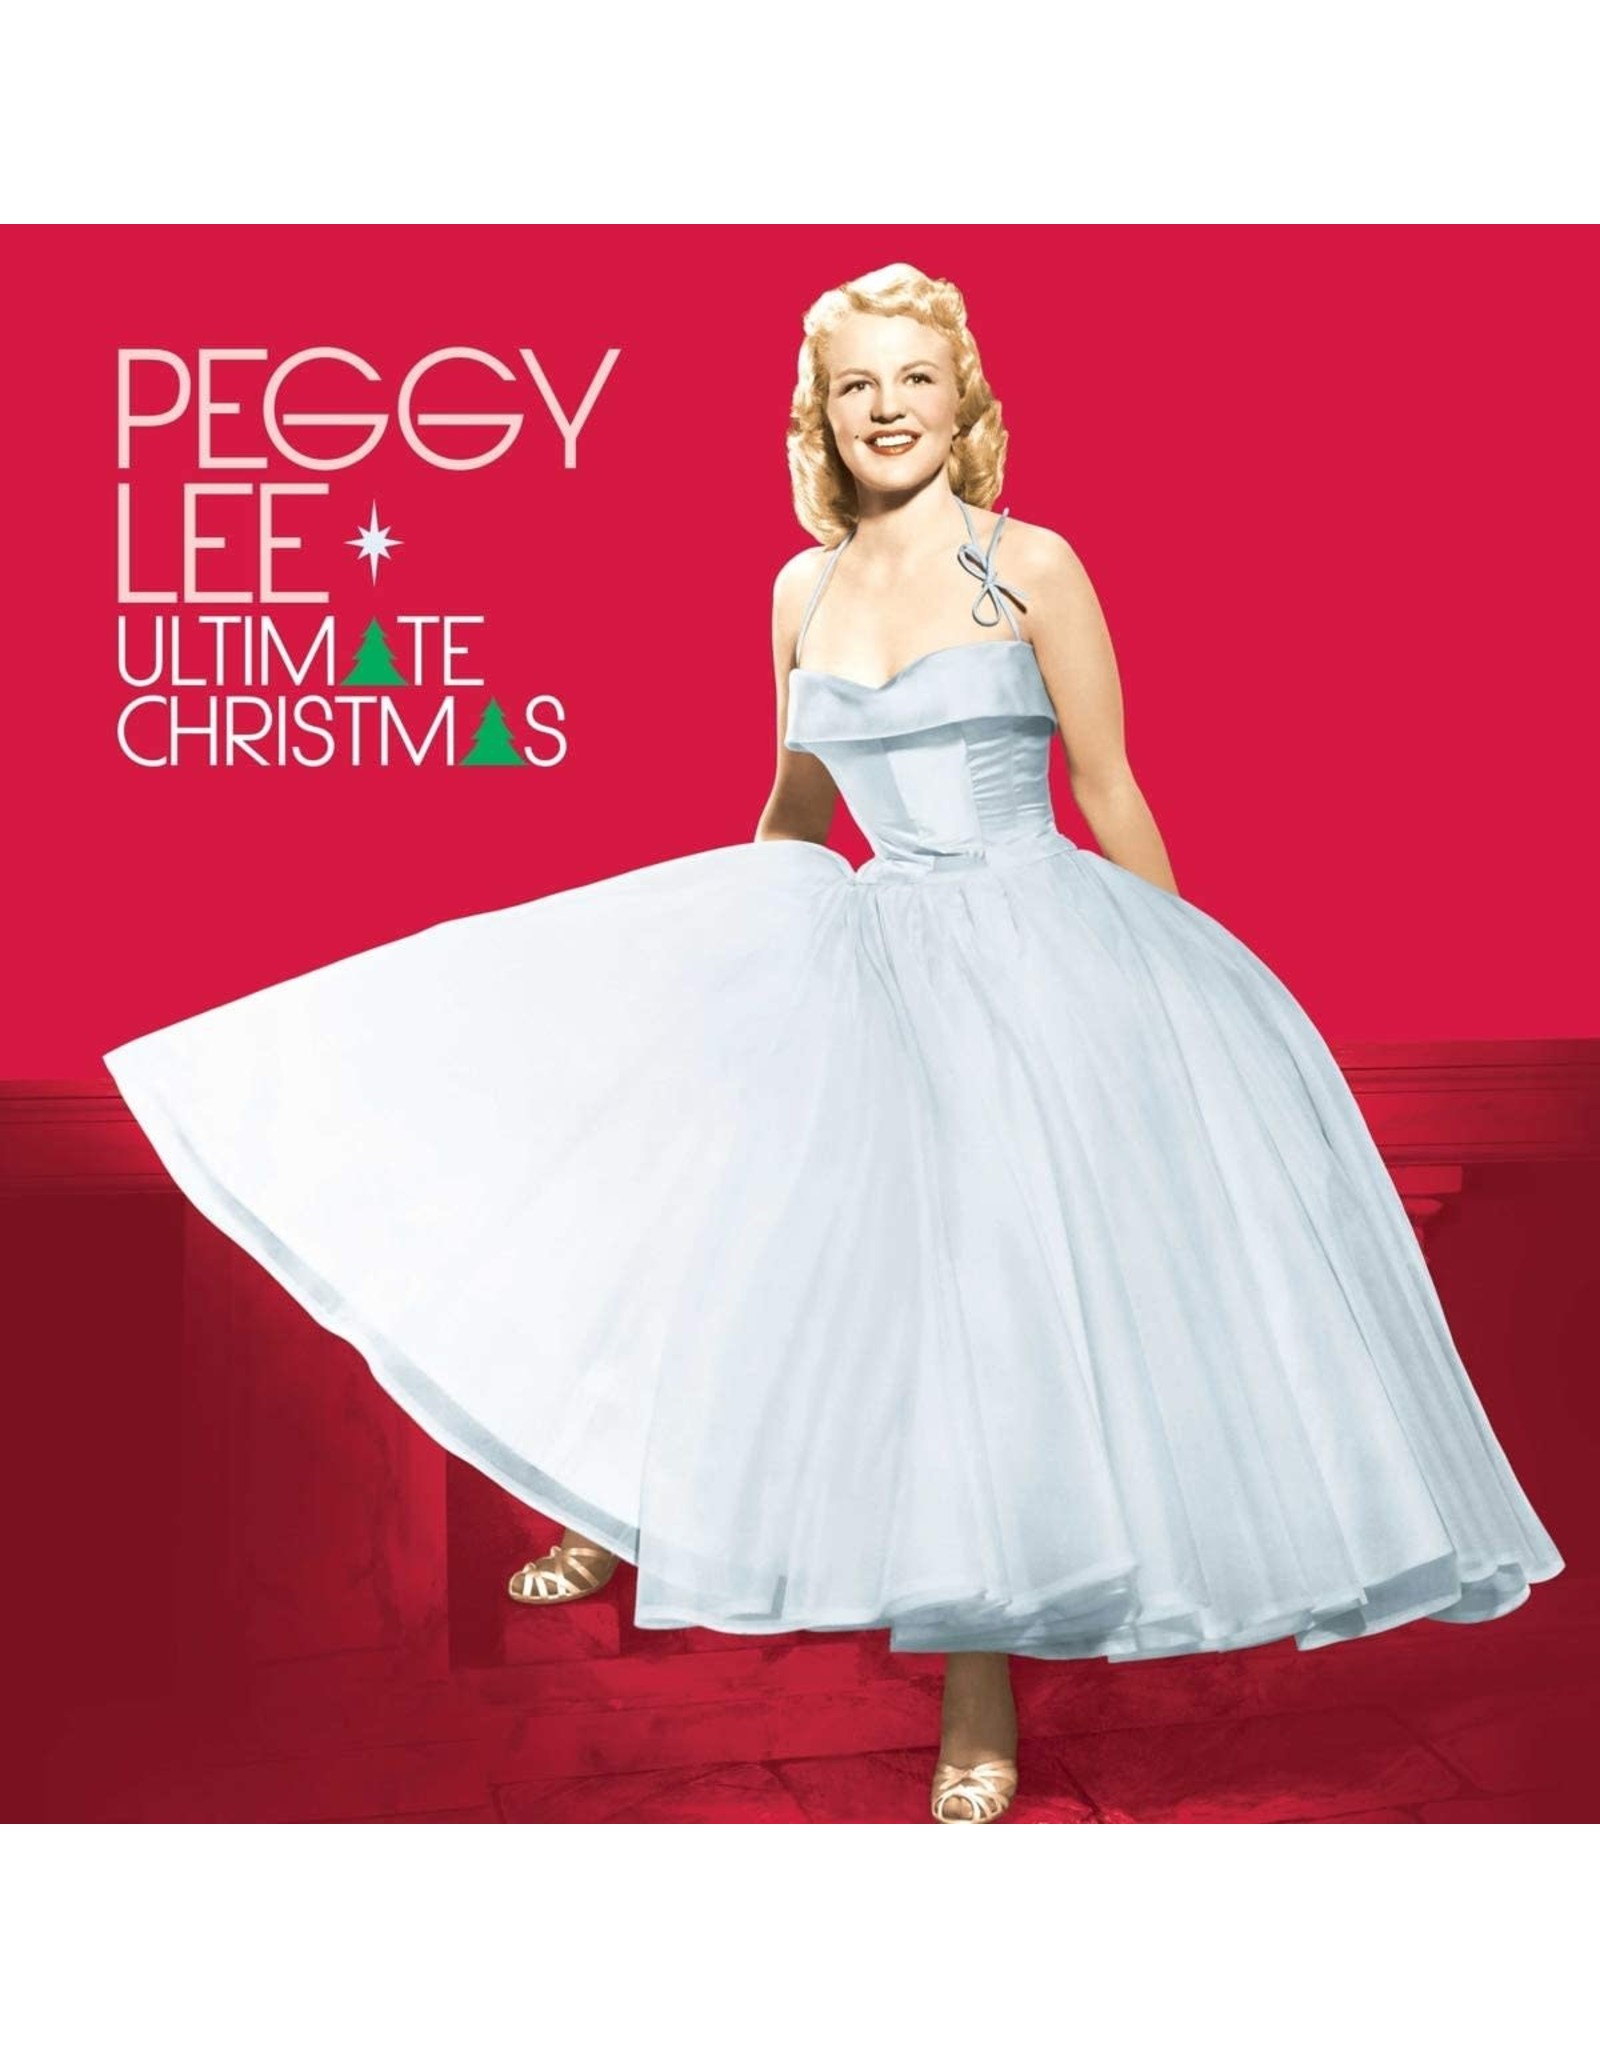 Peggy Lee - Ultimate Christmas